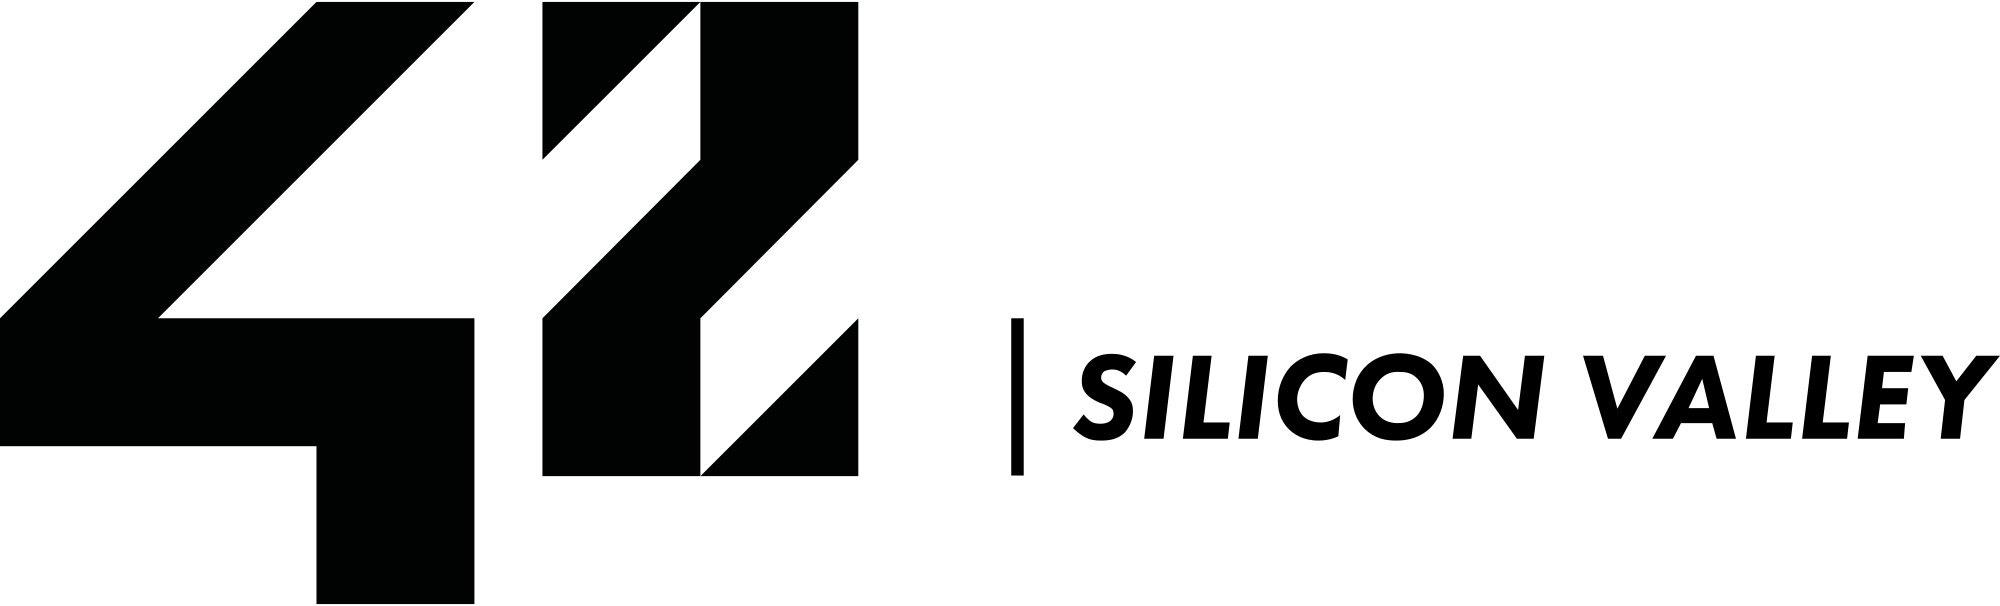 Silicon Graphics Logo - File:42 Silicon Valley Logo.svg - Wikimedia Commons